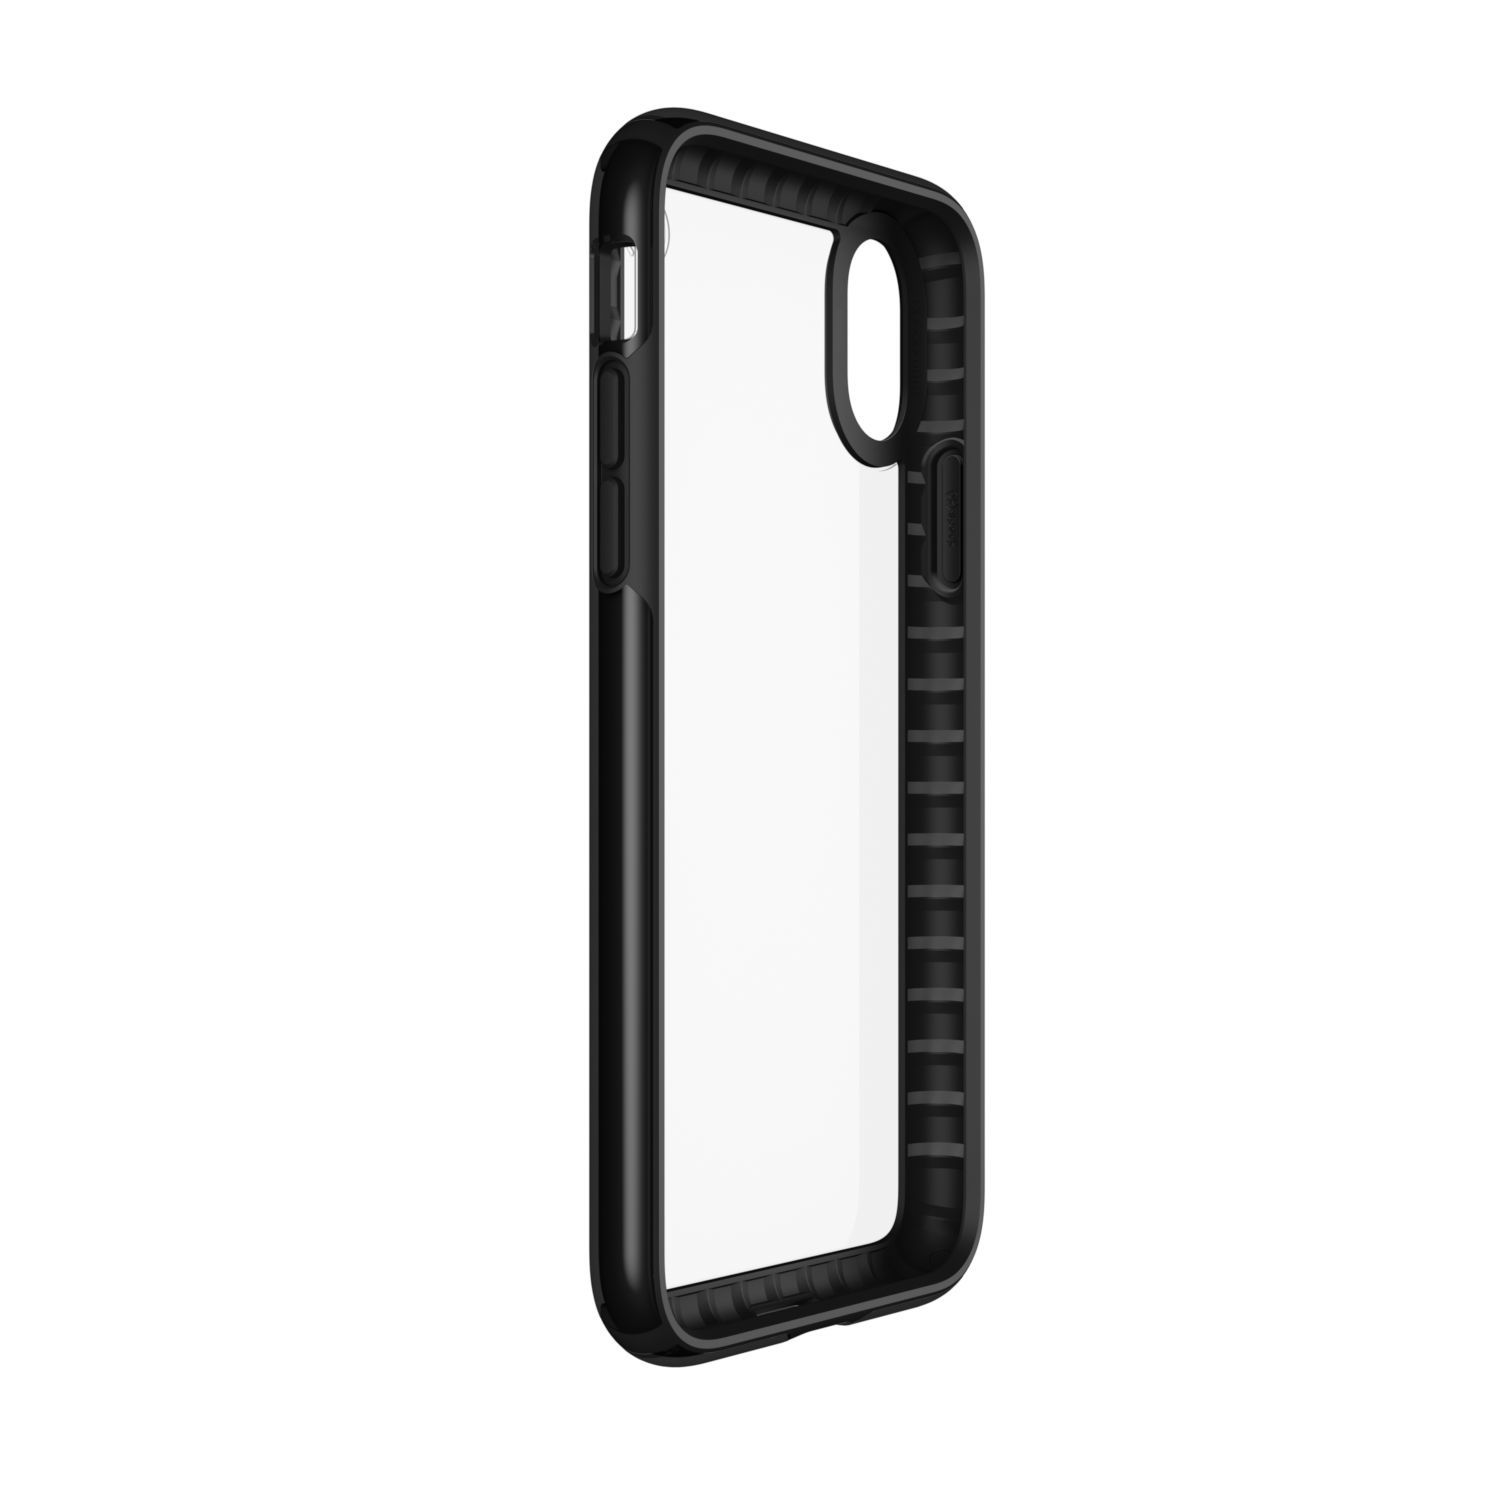 Speck Presidio iPhone X Tough Case - Clear